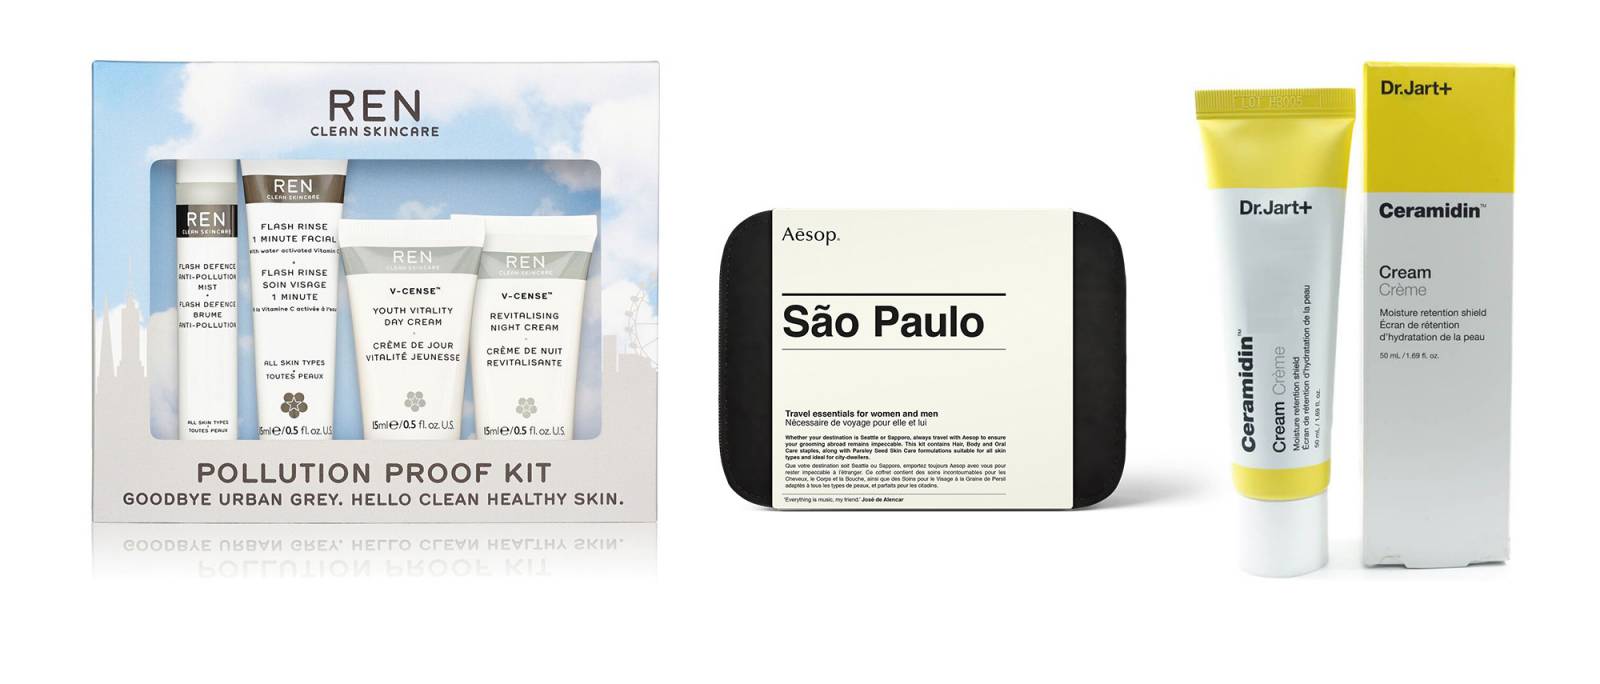 Ren Pollution Proof Kit, cent 115 zł; Aesop Sao Paulo City Kit, cent 285 zł; krem Ceramidin Dr. Jart, cena 169 zł (Fot. Materiały prasowe)